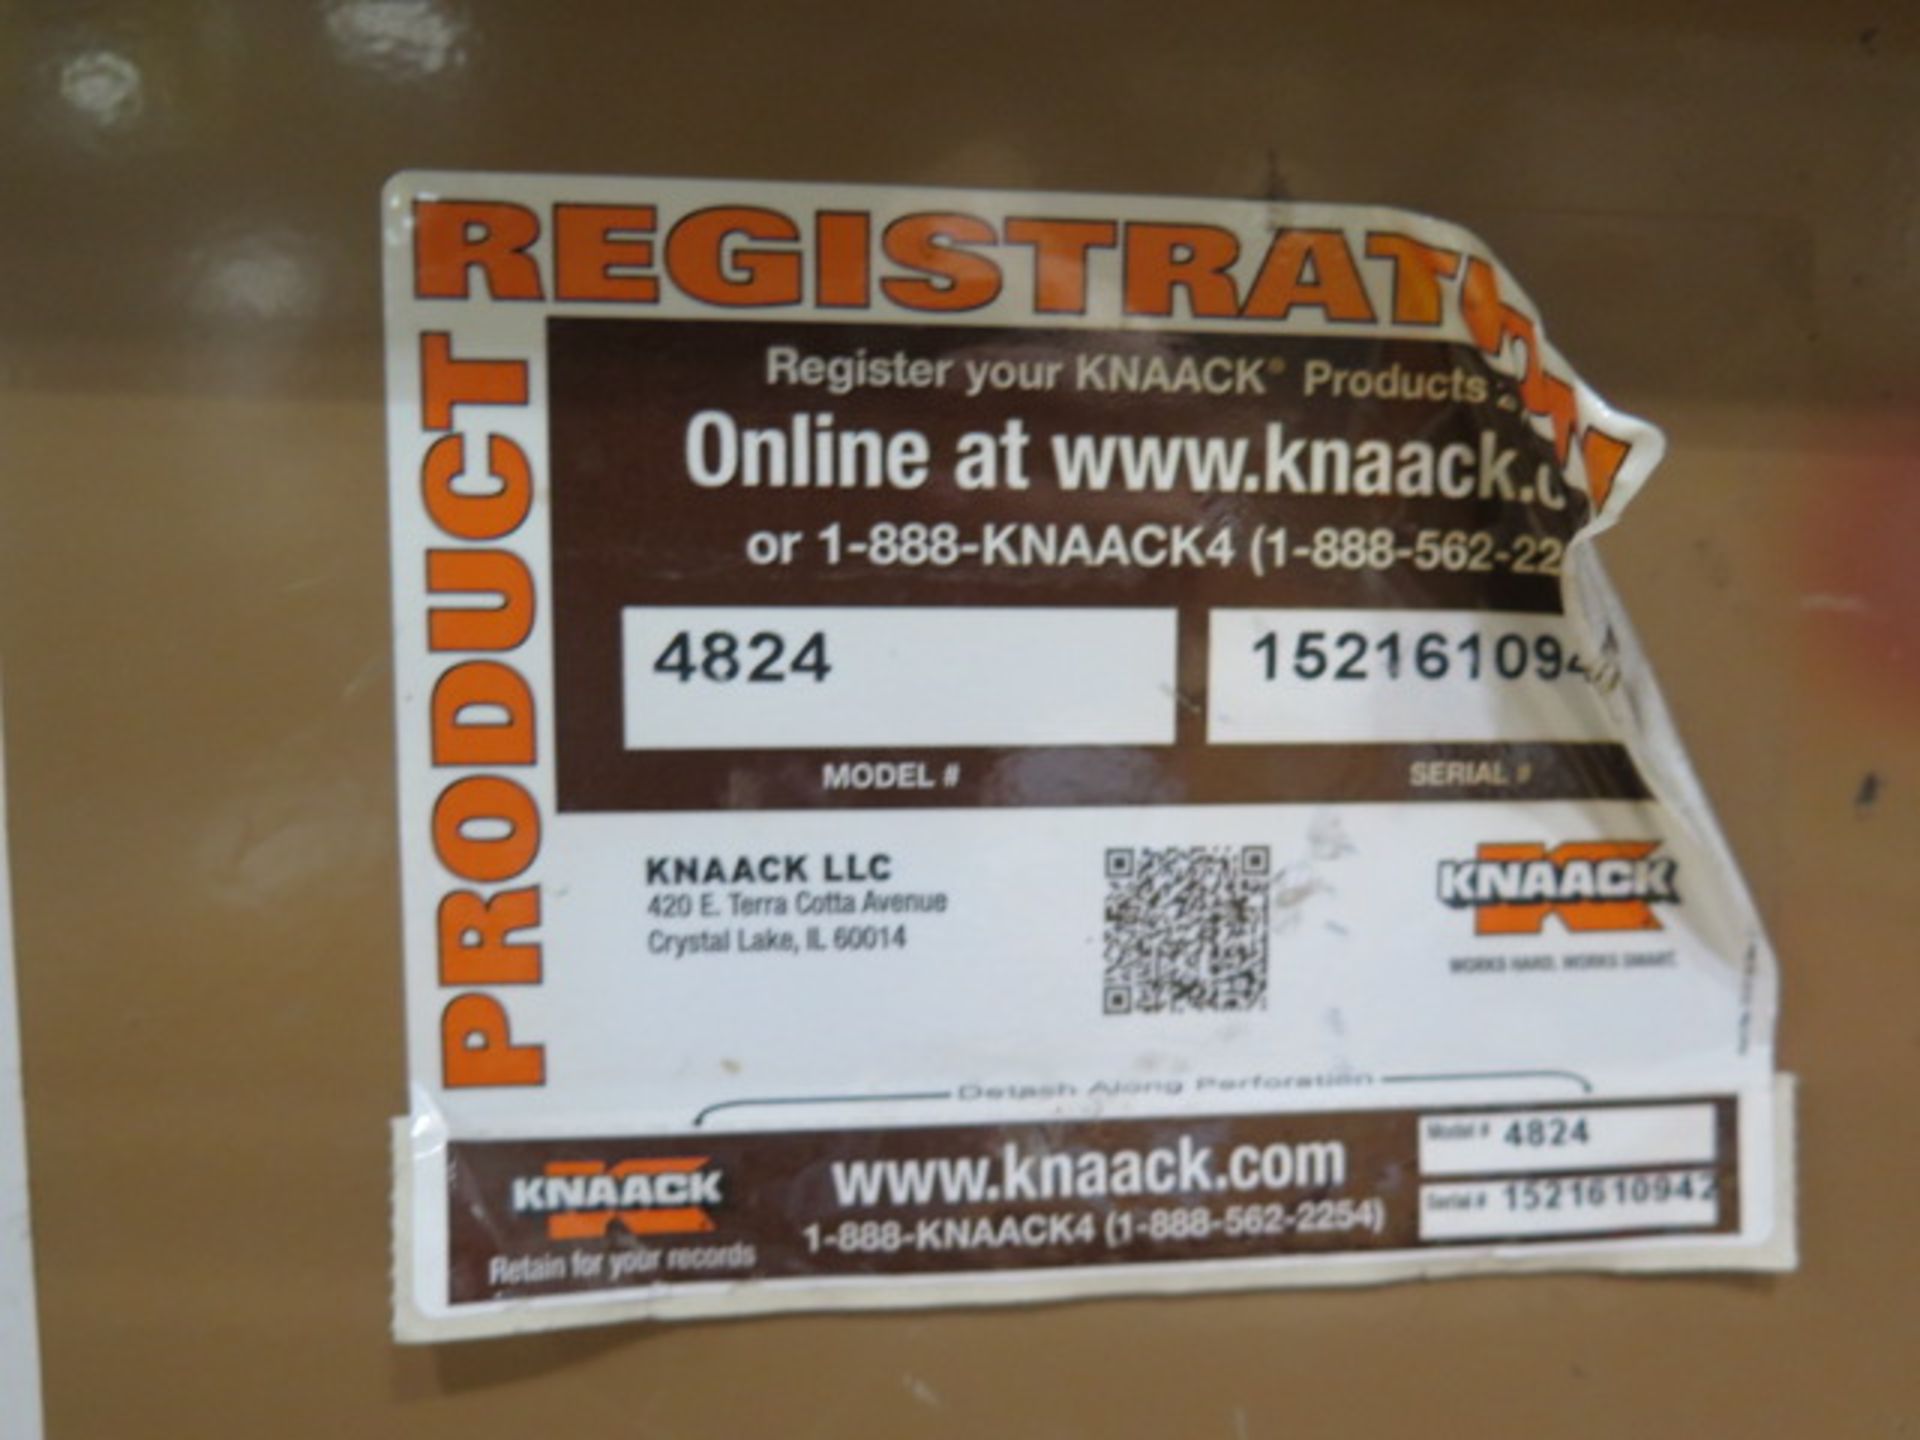 Knaack mdl. 4824 Rolling Job Box (SOLD AS-IS - NO WARRANTY) - Image 6 of 6